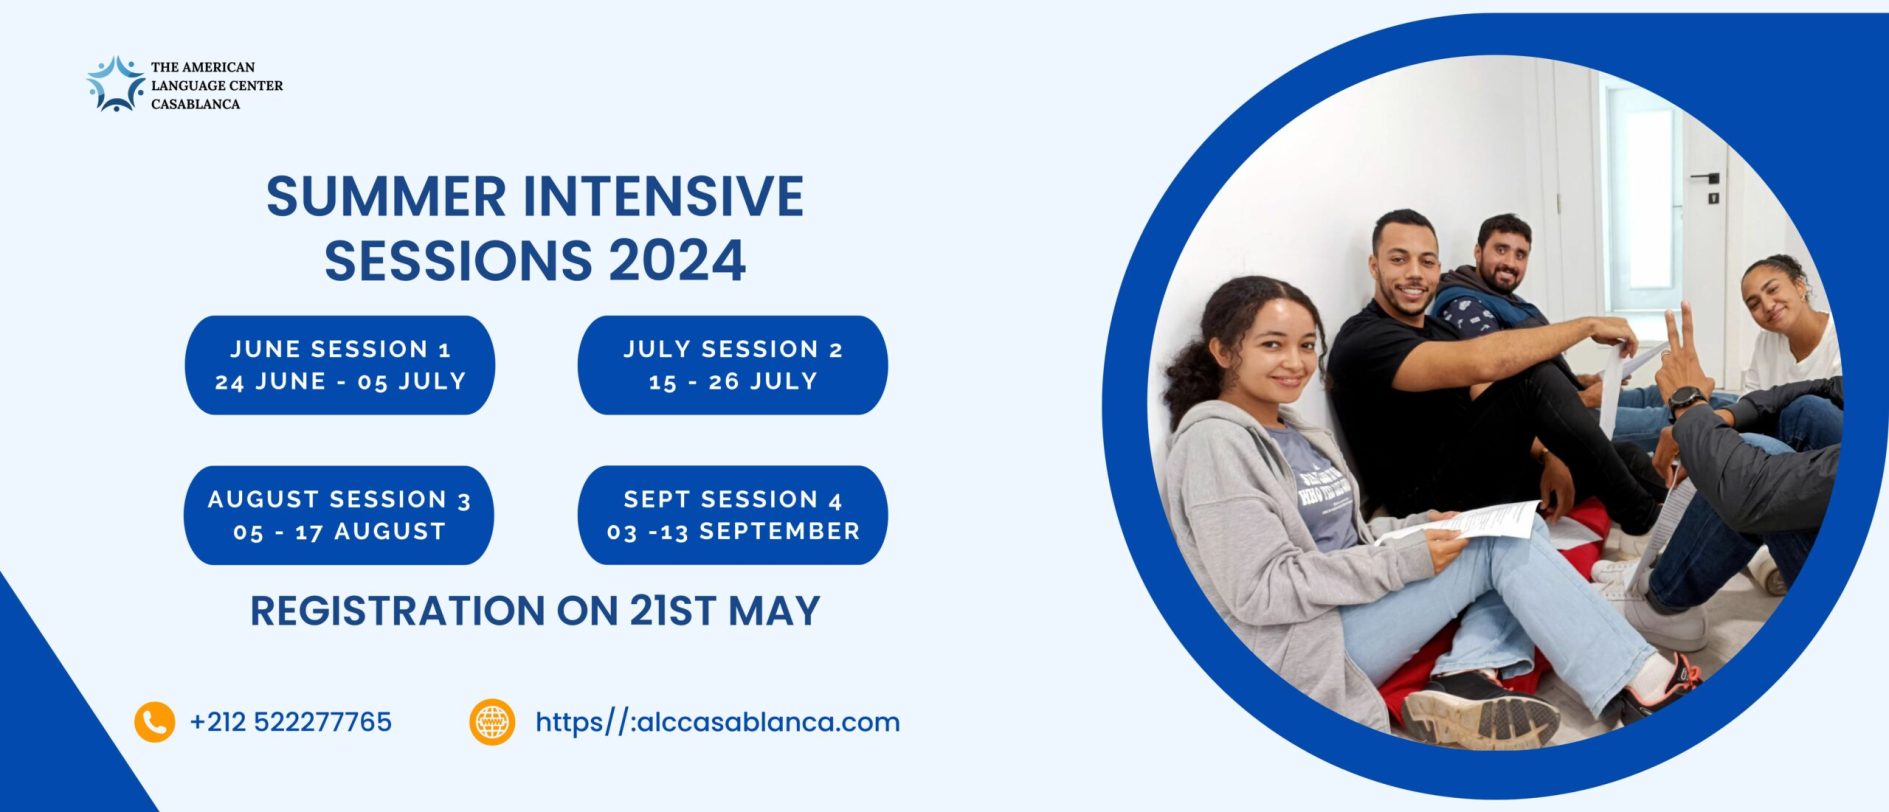 ALC Casablanca English Summer intensive sessions 2024